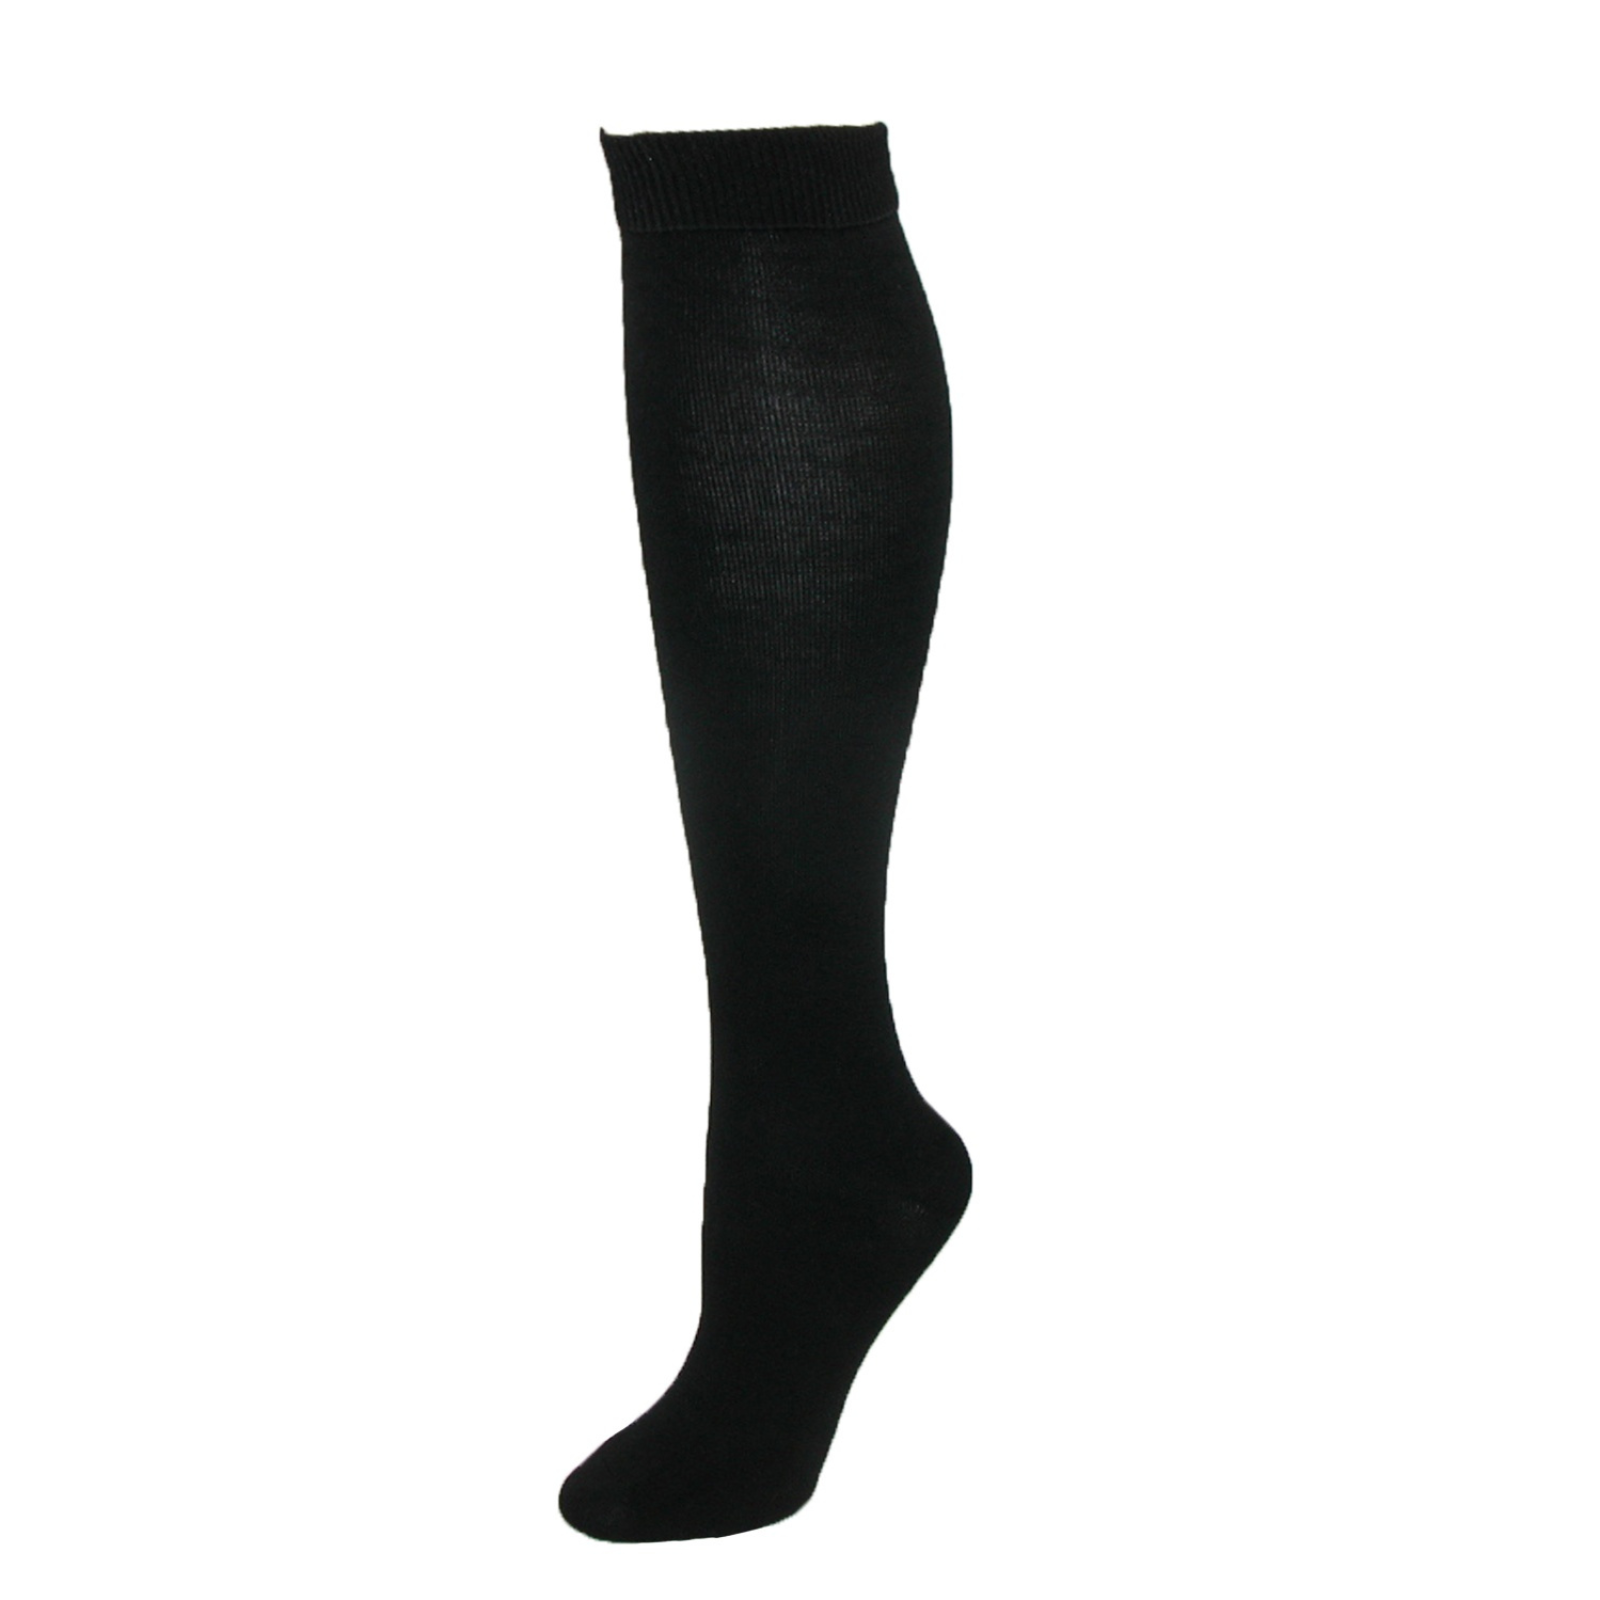 Black MeMoi Bamboo Knee High women's sock on display from side